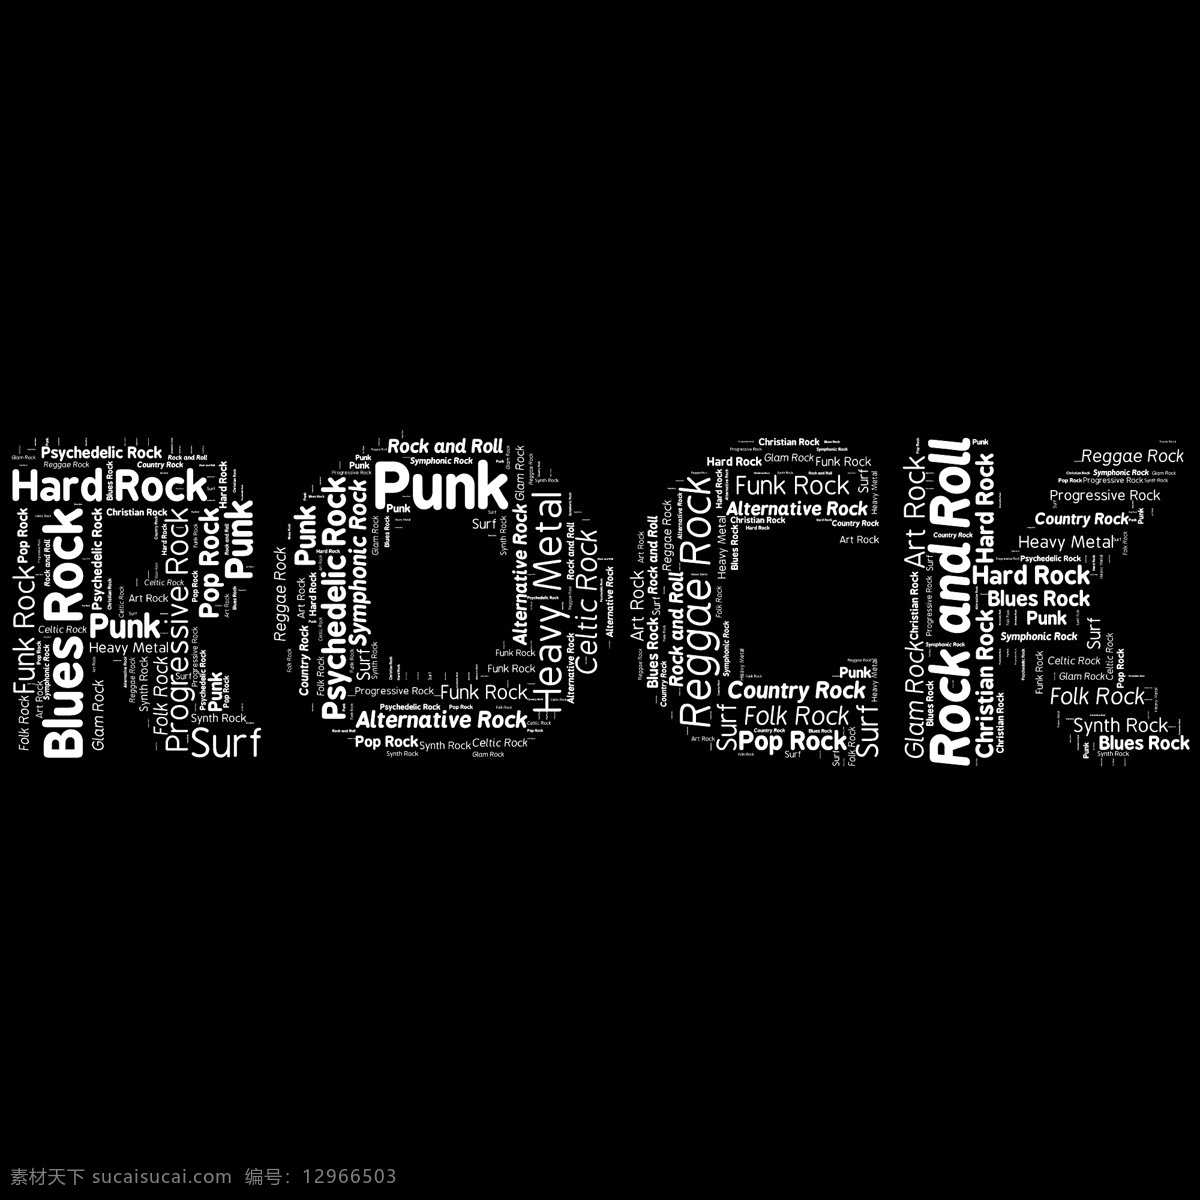 rock 摇滚 摇滚乐 音乐 重金属 朋克 乐队 非主流 纹身图案 t恤图案 摇滚图标 音乐图标 摇滚标志 音乐标志 舞蹈音乐 文化艺术